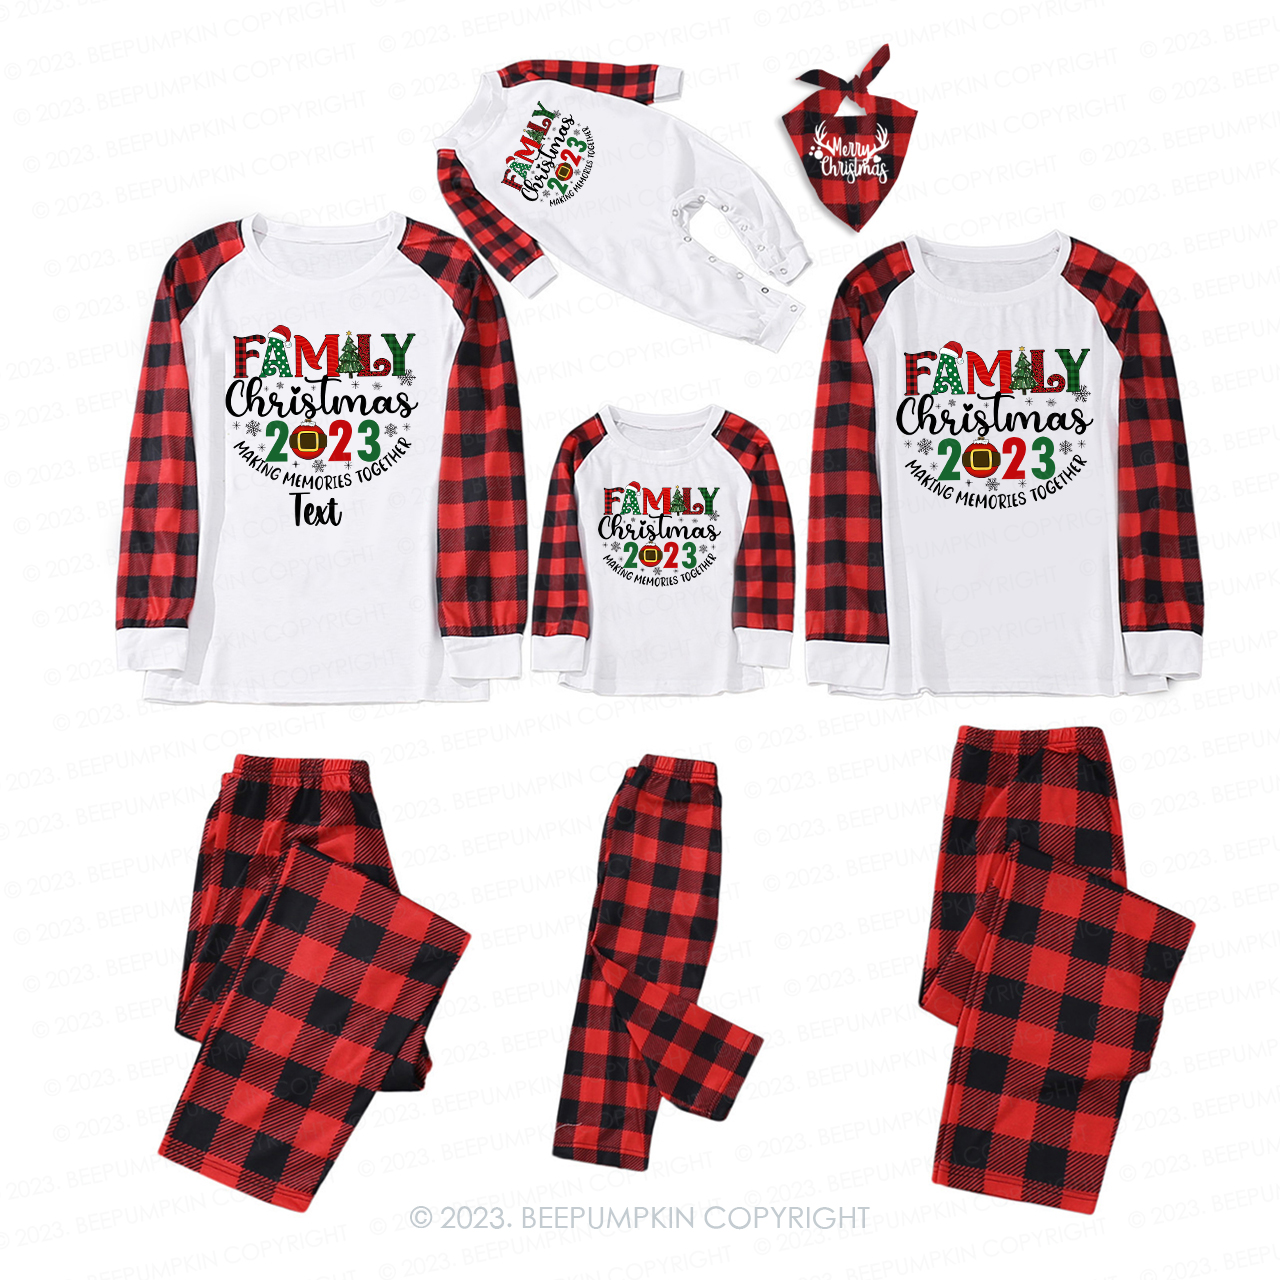 Family Christmas 2023 Making Memories Together Pajamas Beepumpkin